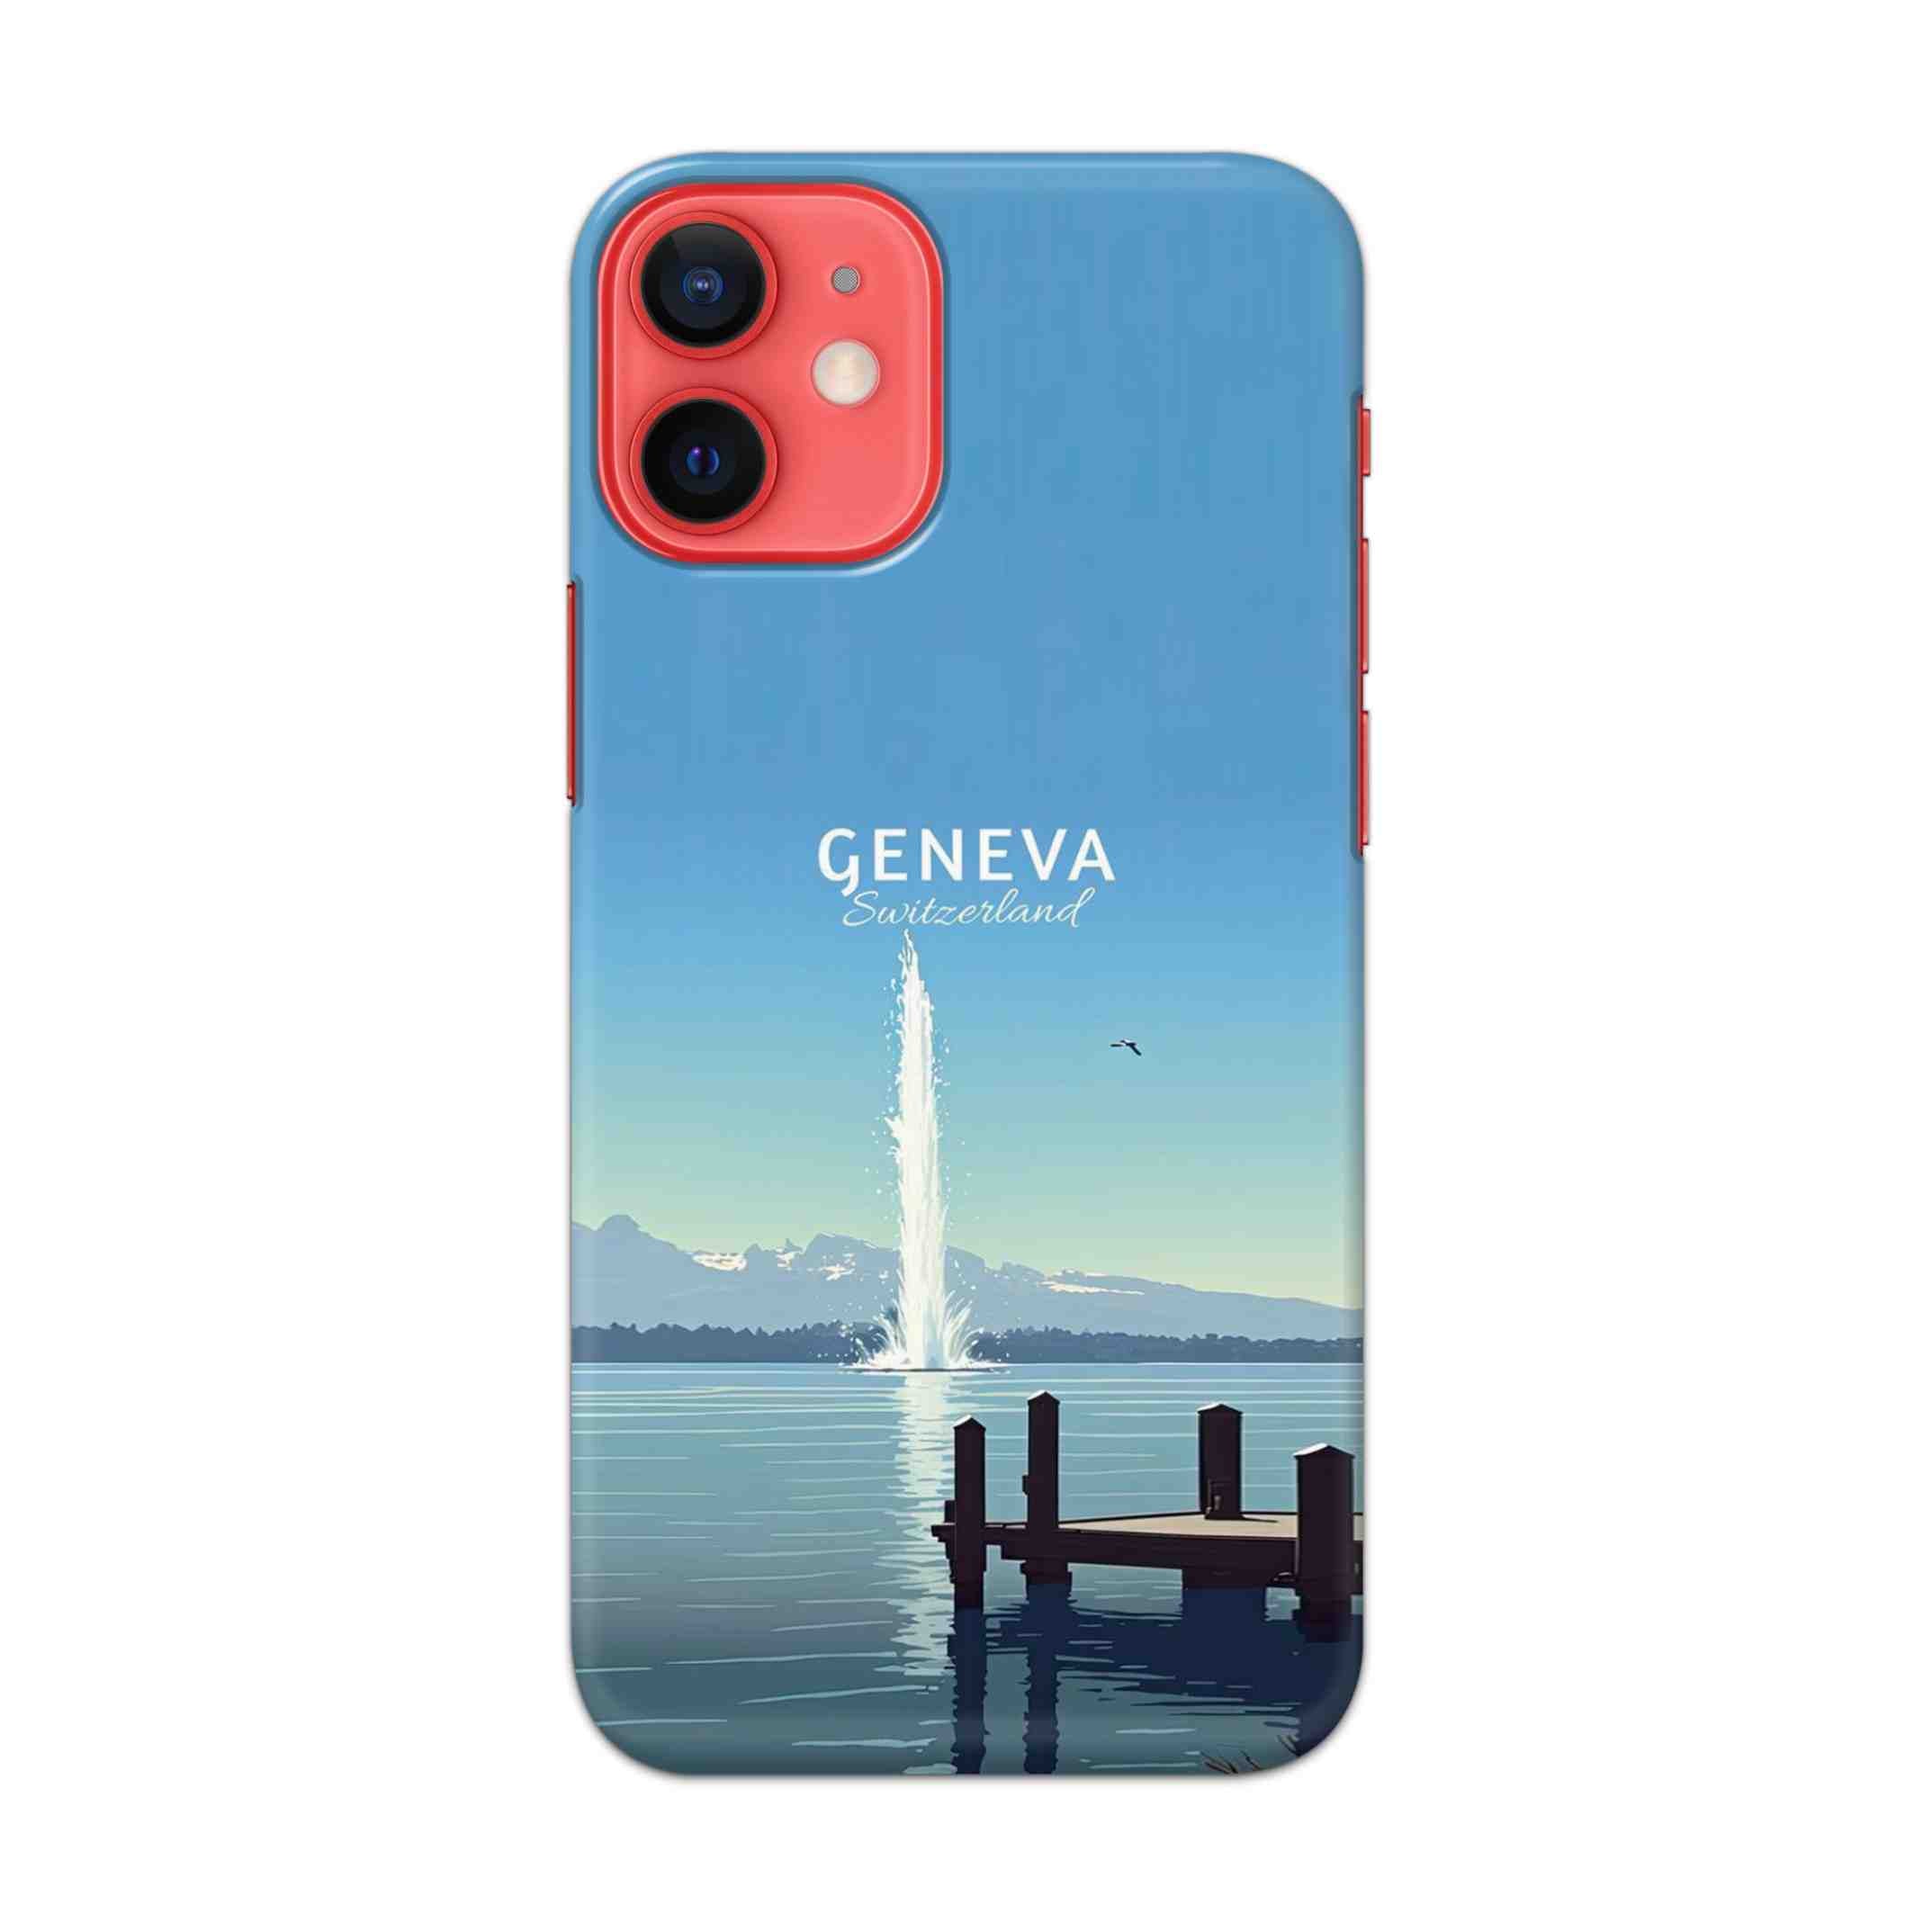 Buy Geneva Hard Back Mobile Phone Case/Cover For Apple iPhone 12 mini Online